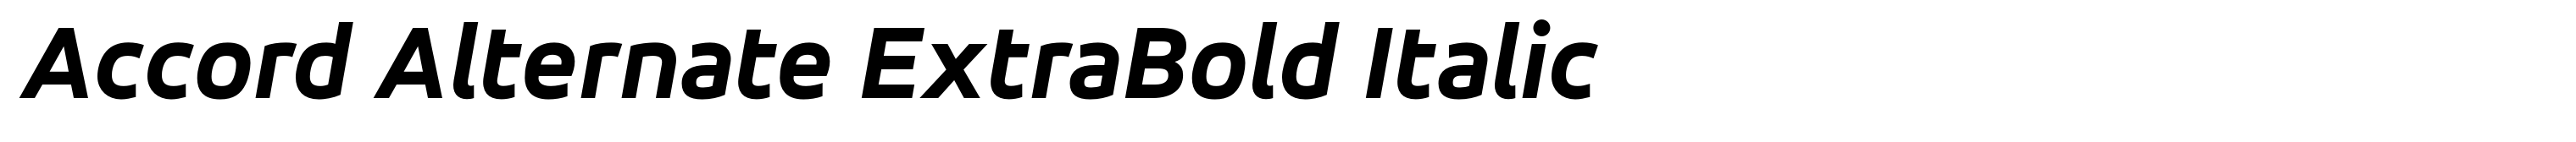 Accord Alternate ExtraBold Italic